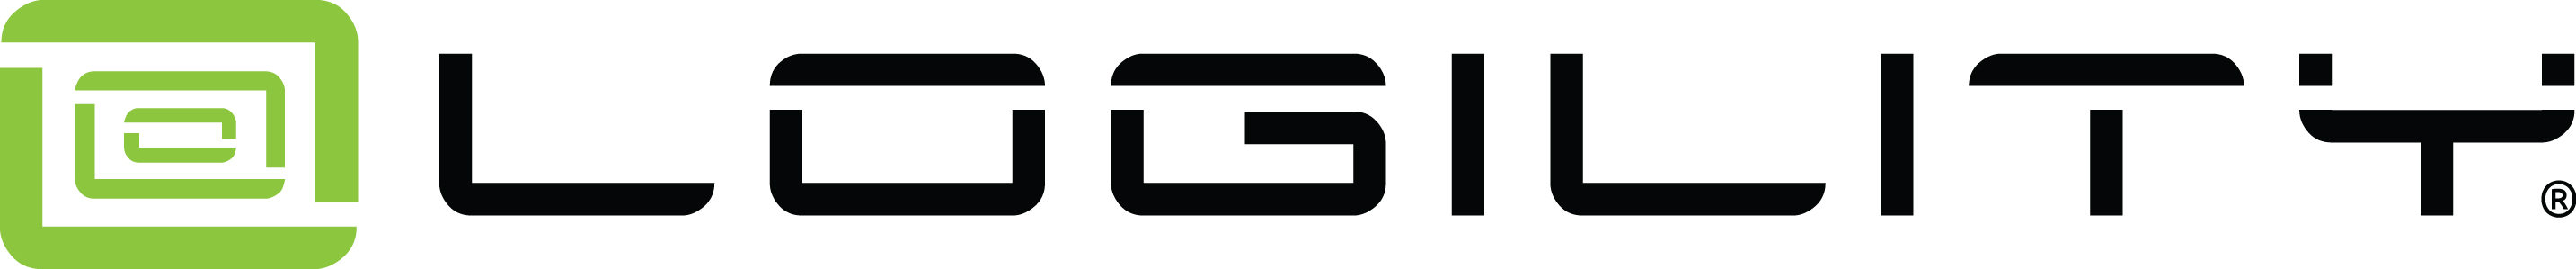 Logility logo